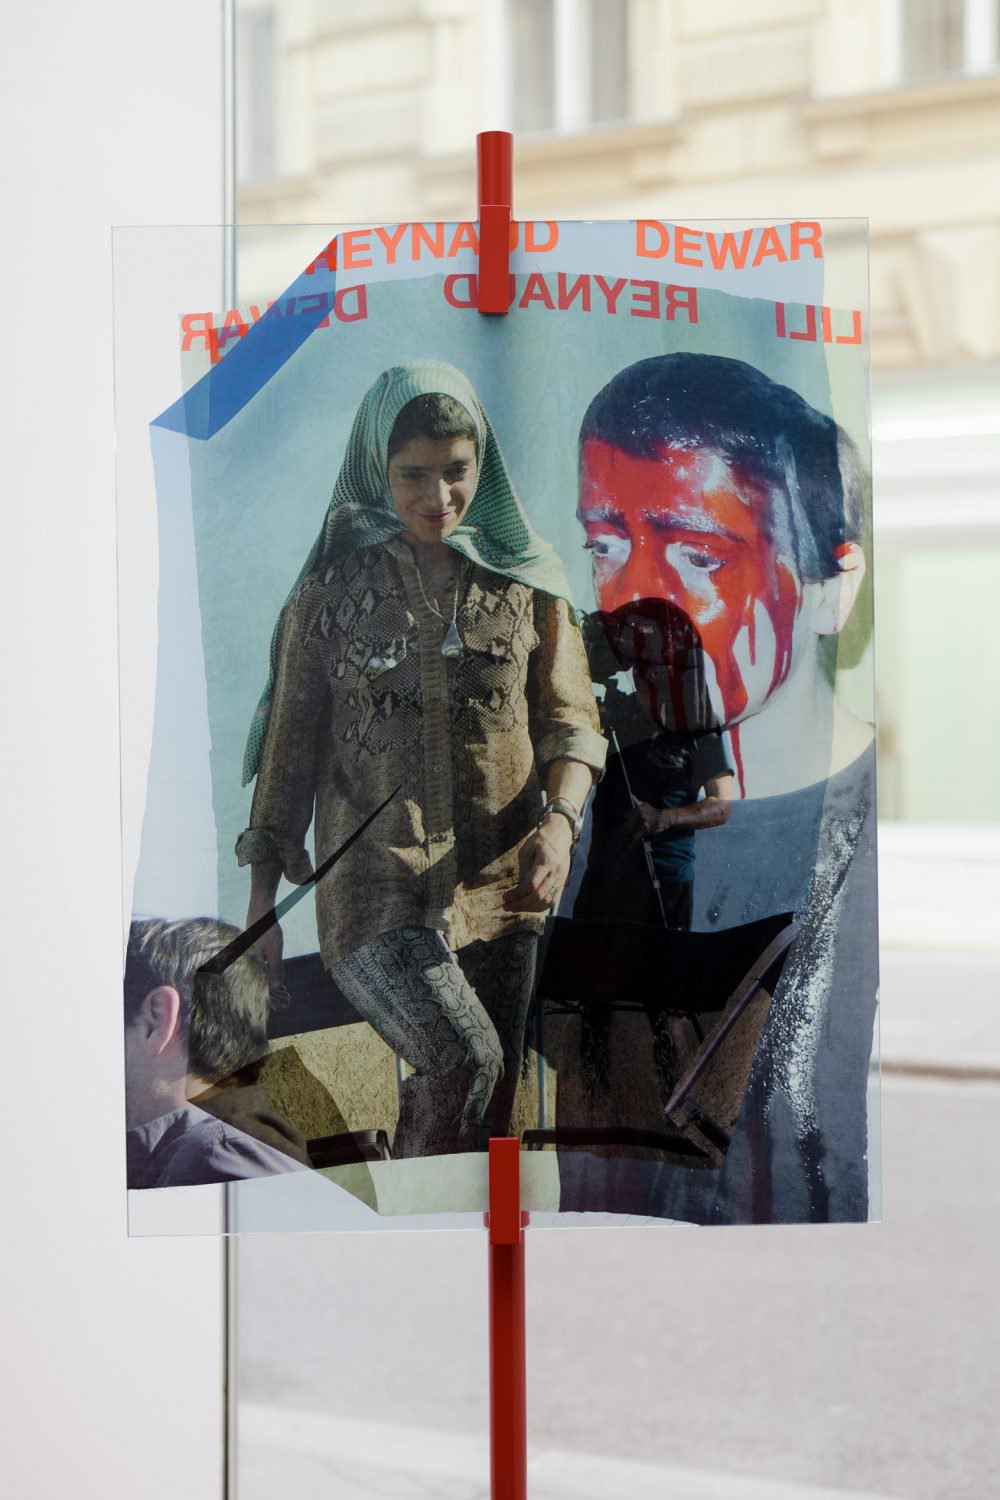 Lili Reynaud-DewarBeyond the Land of Minimal Possessions (Monument to Lili Reynaud-Dewar), 2018Glass, silk, lacquered metal193 x 100 cm